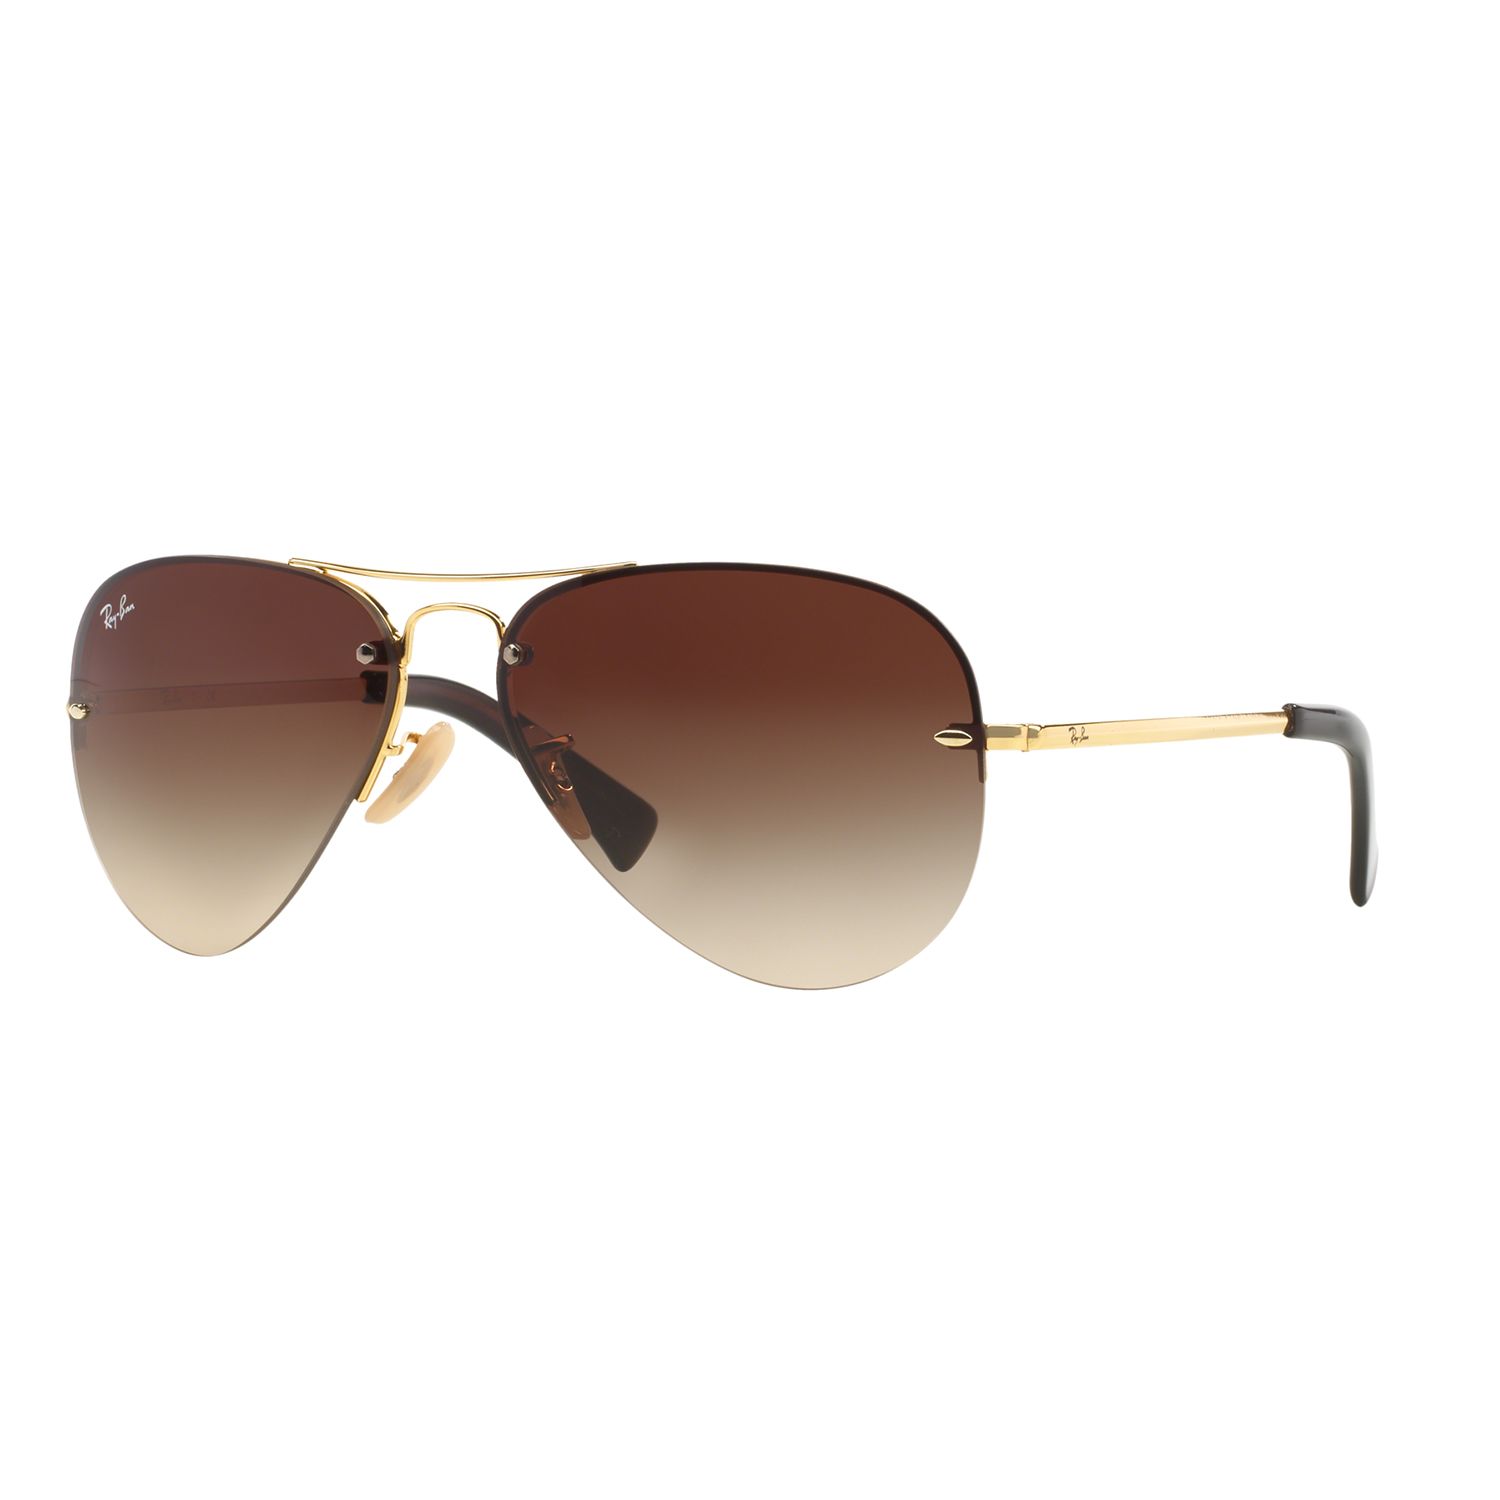 Men's Ray-Ban Sunglasses | Kohl's